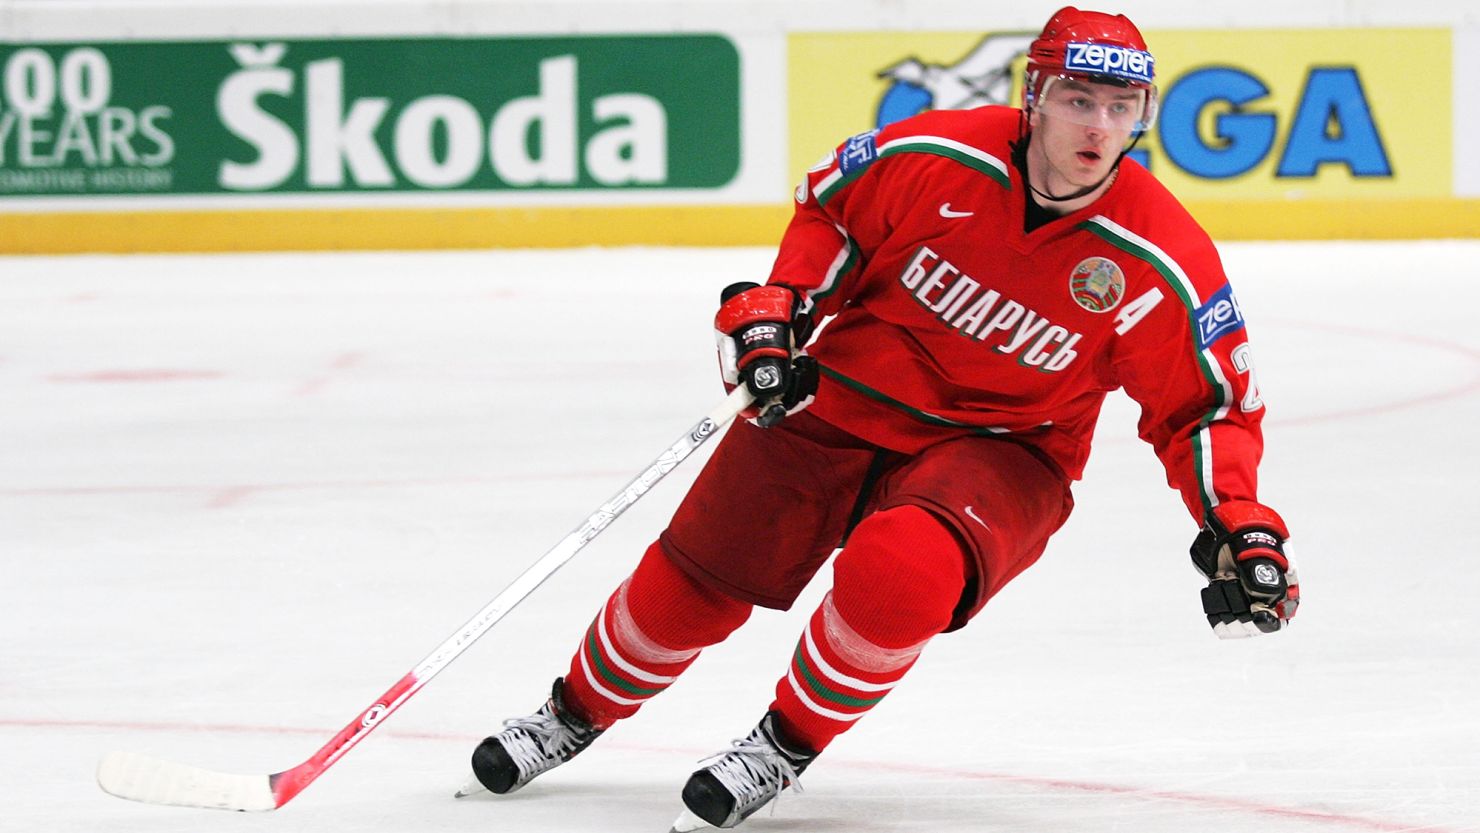 Koltsov competes at the 2005 ice hockey world championships in Vienna, Austria.